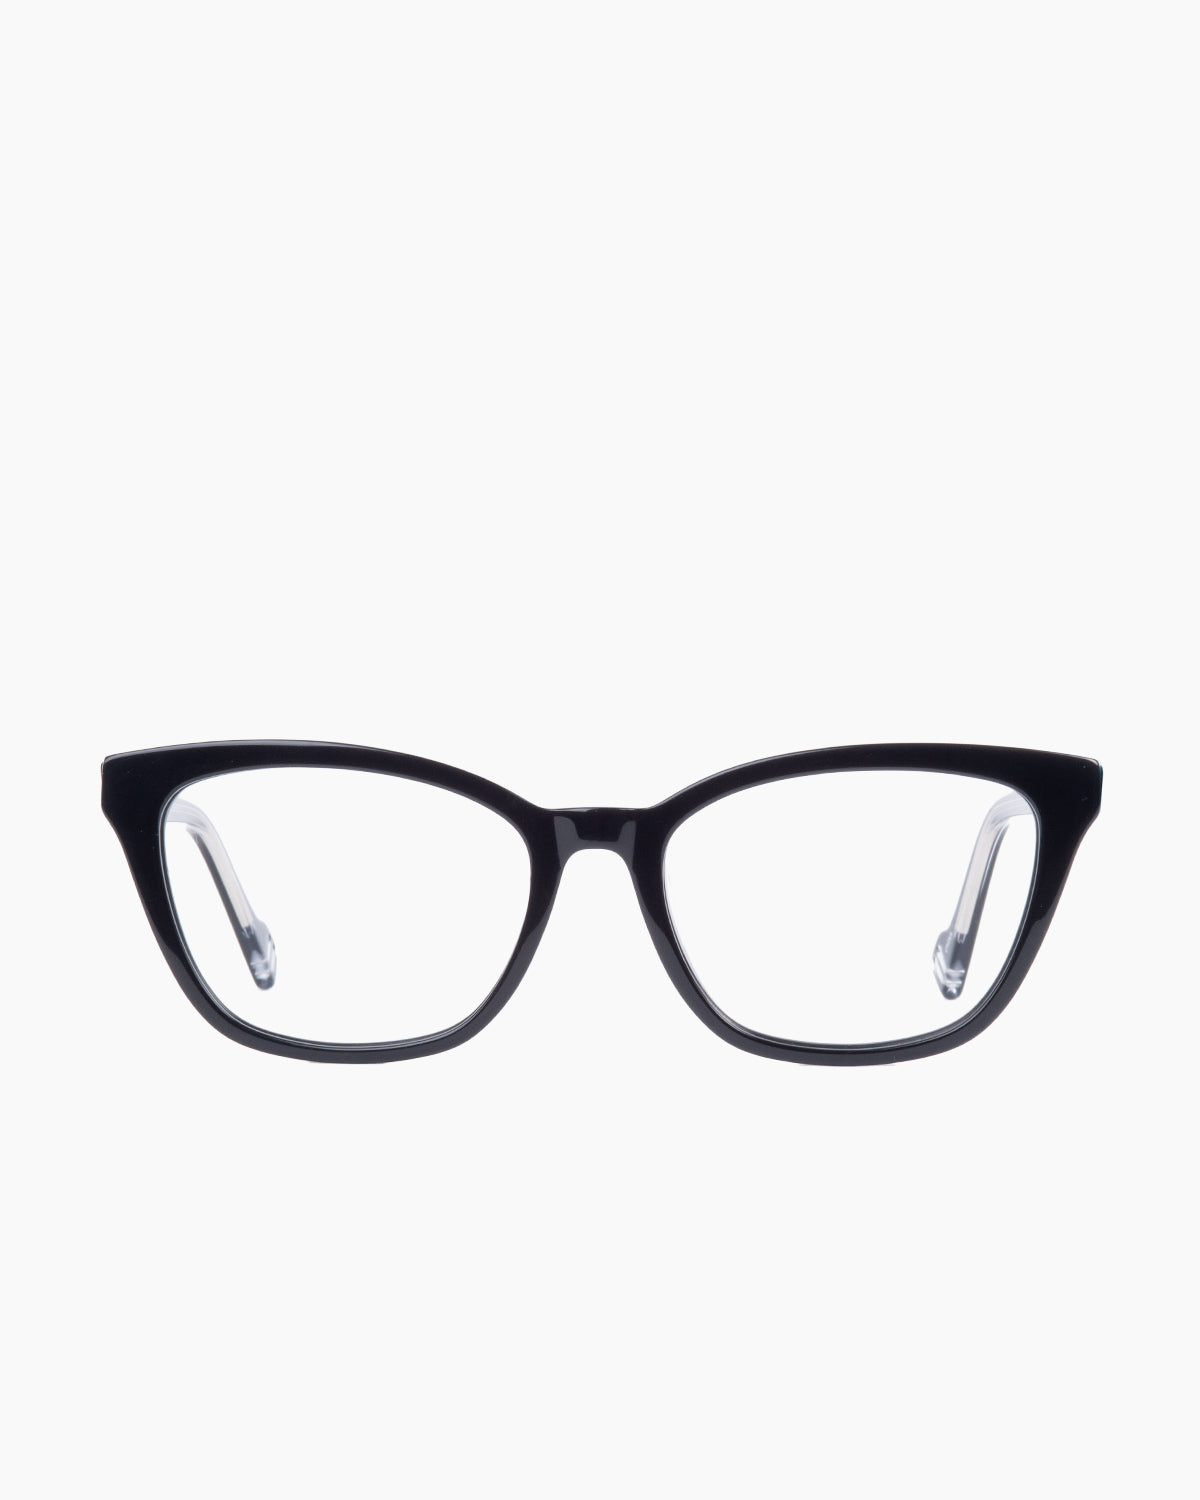 Evolve - Sally - 10 | glasses bar:  Marie-Sophie Dion